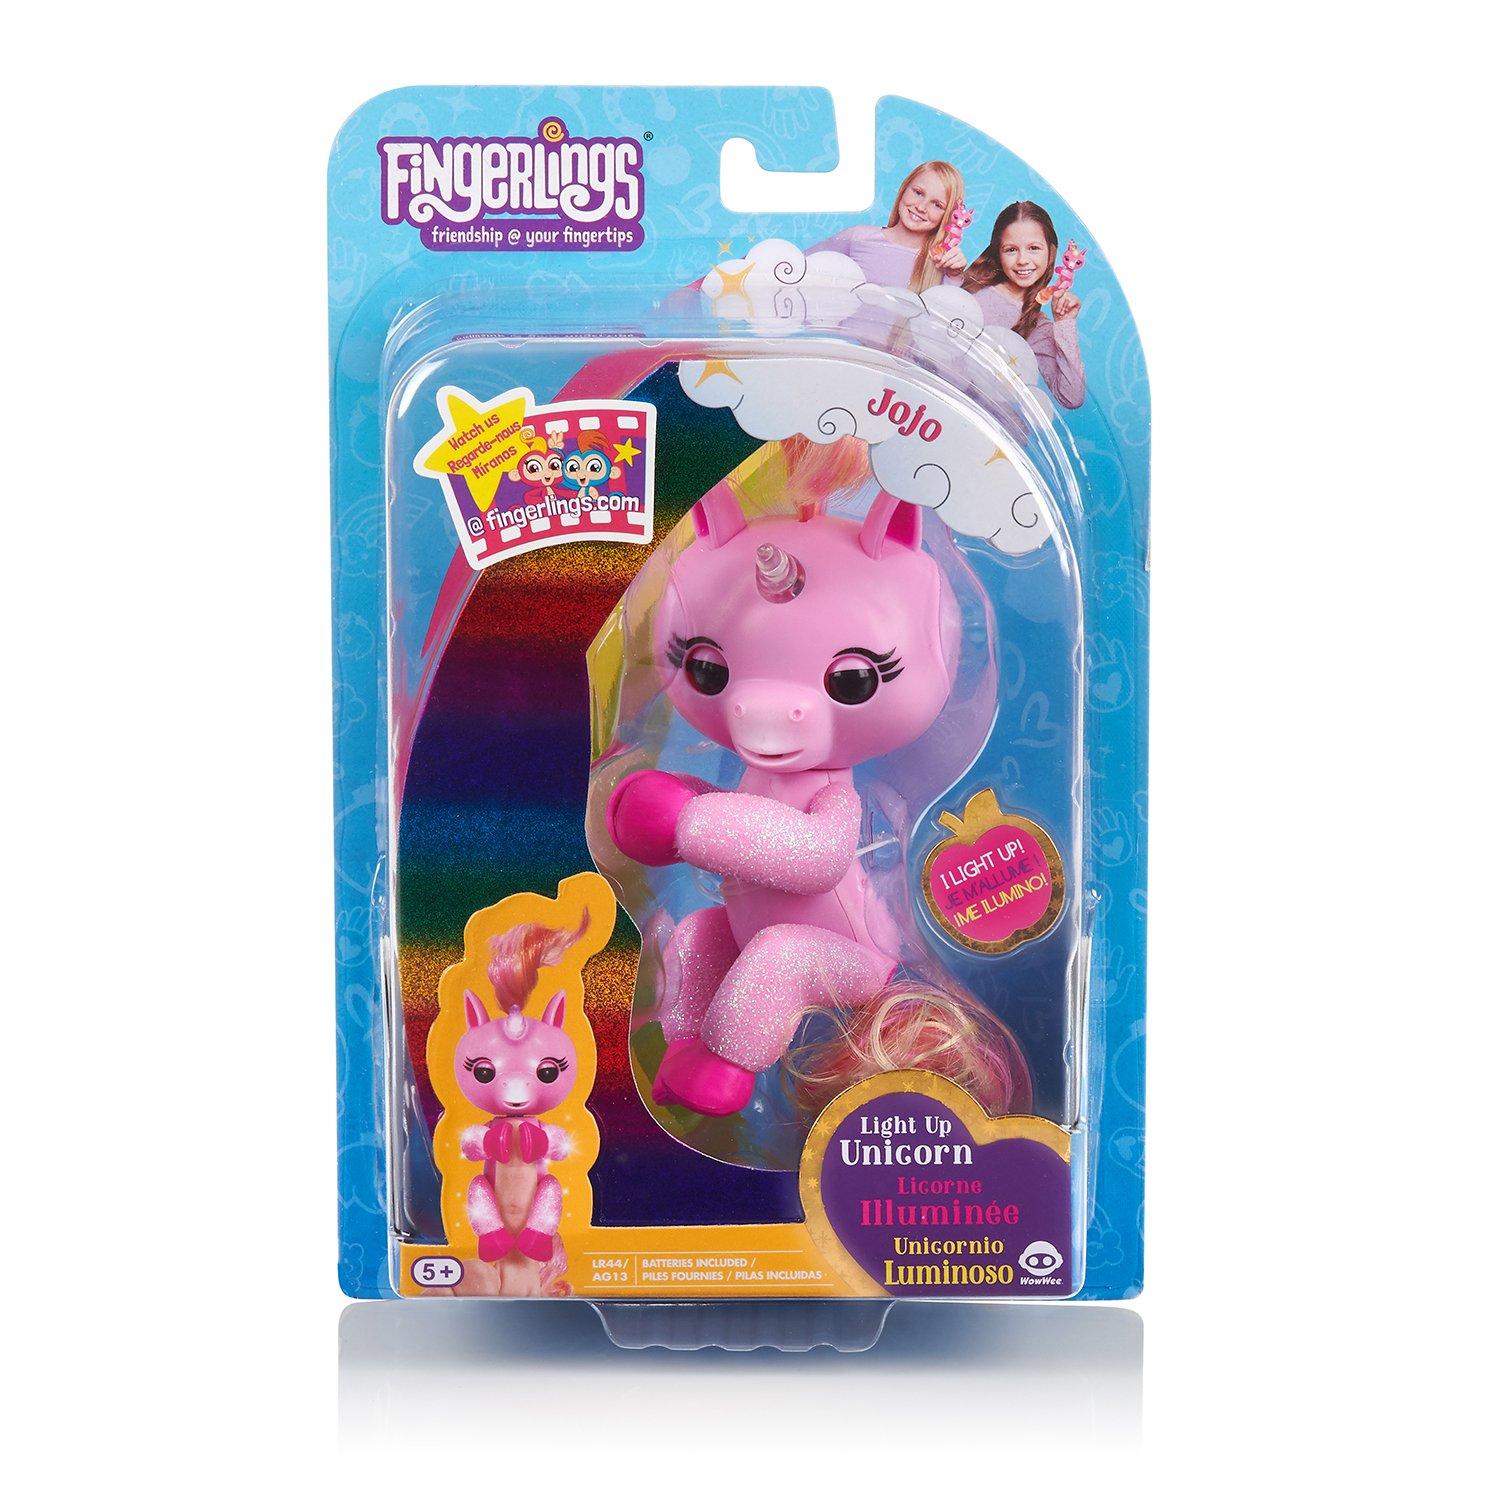 light up unicorn bath toy